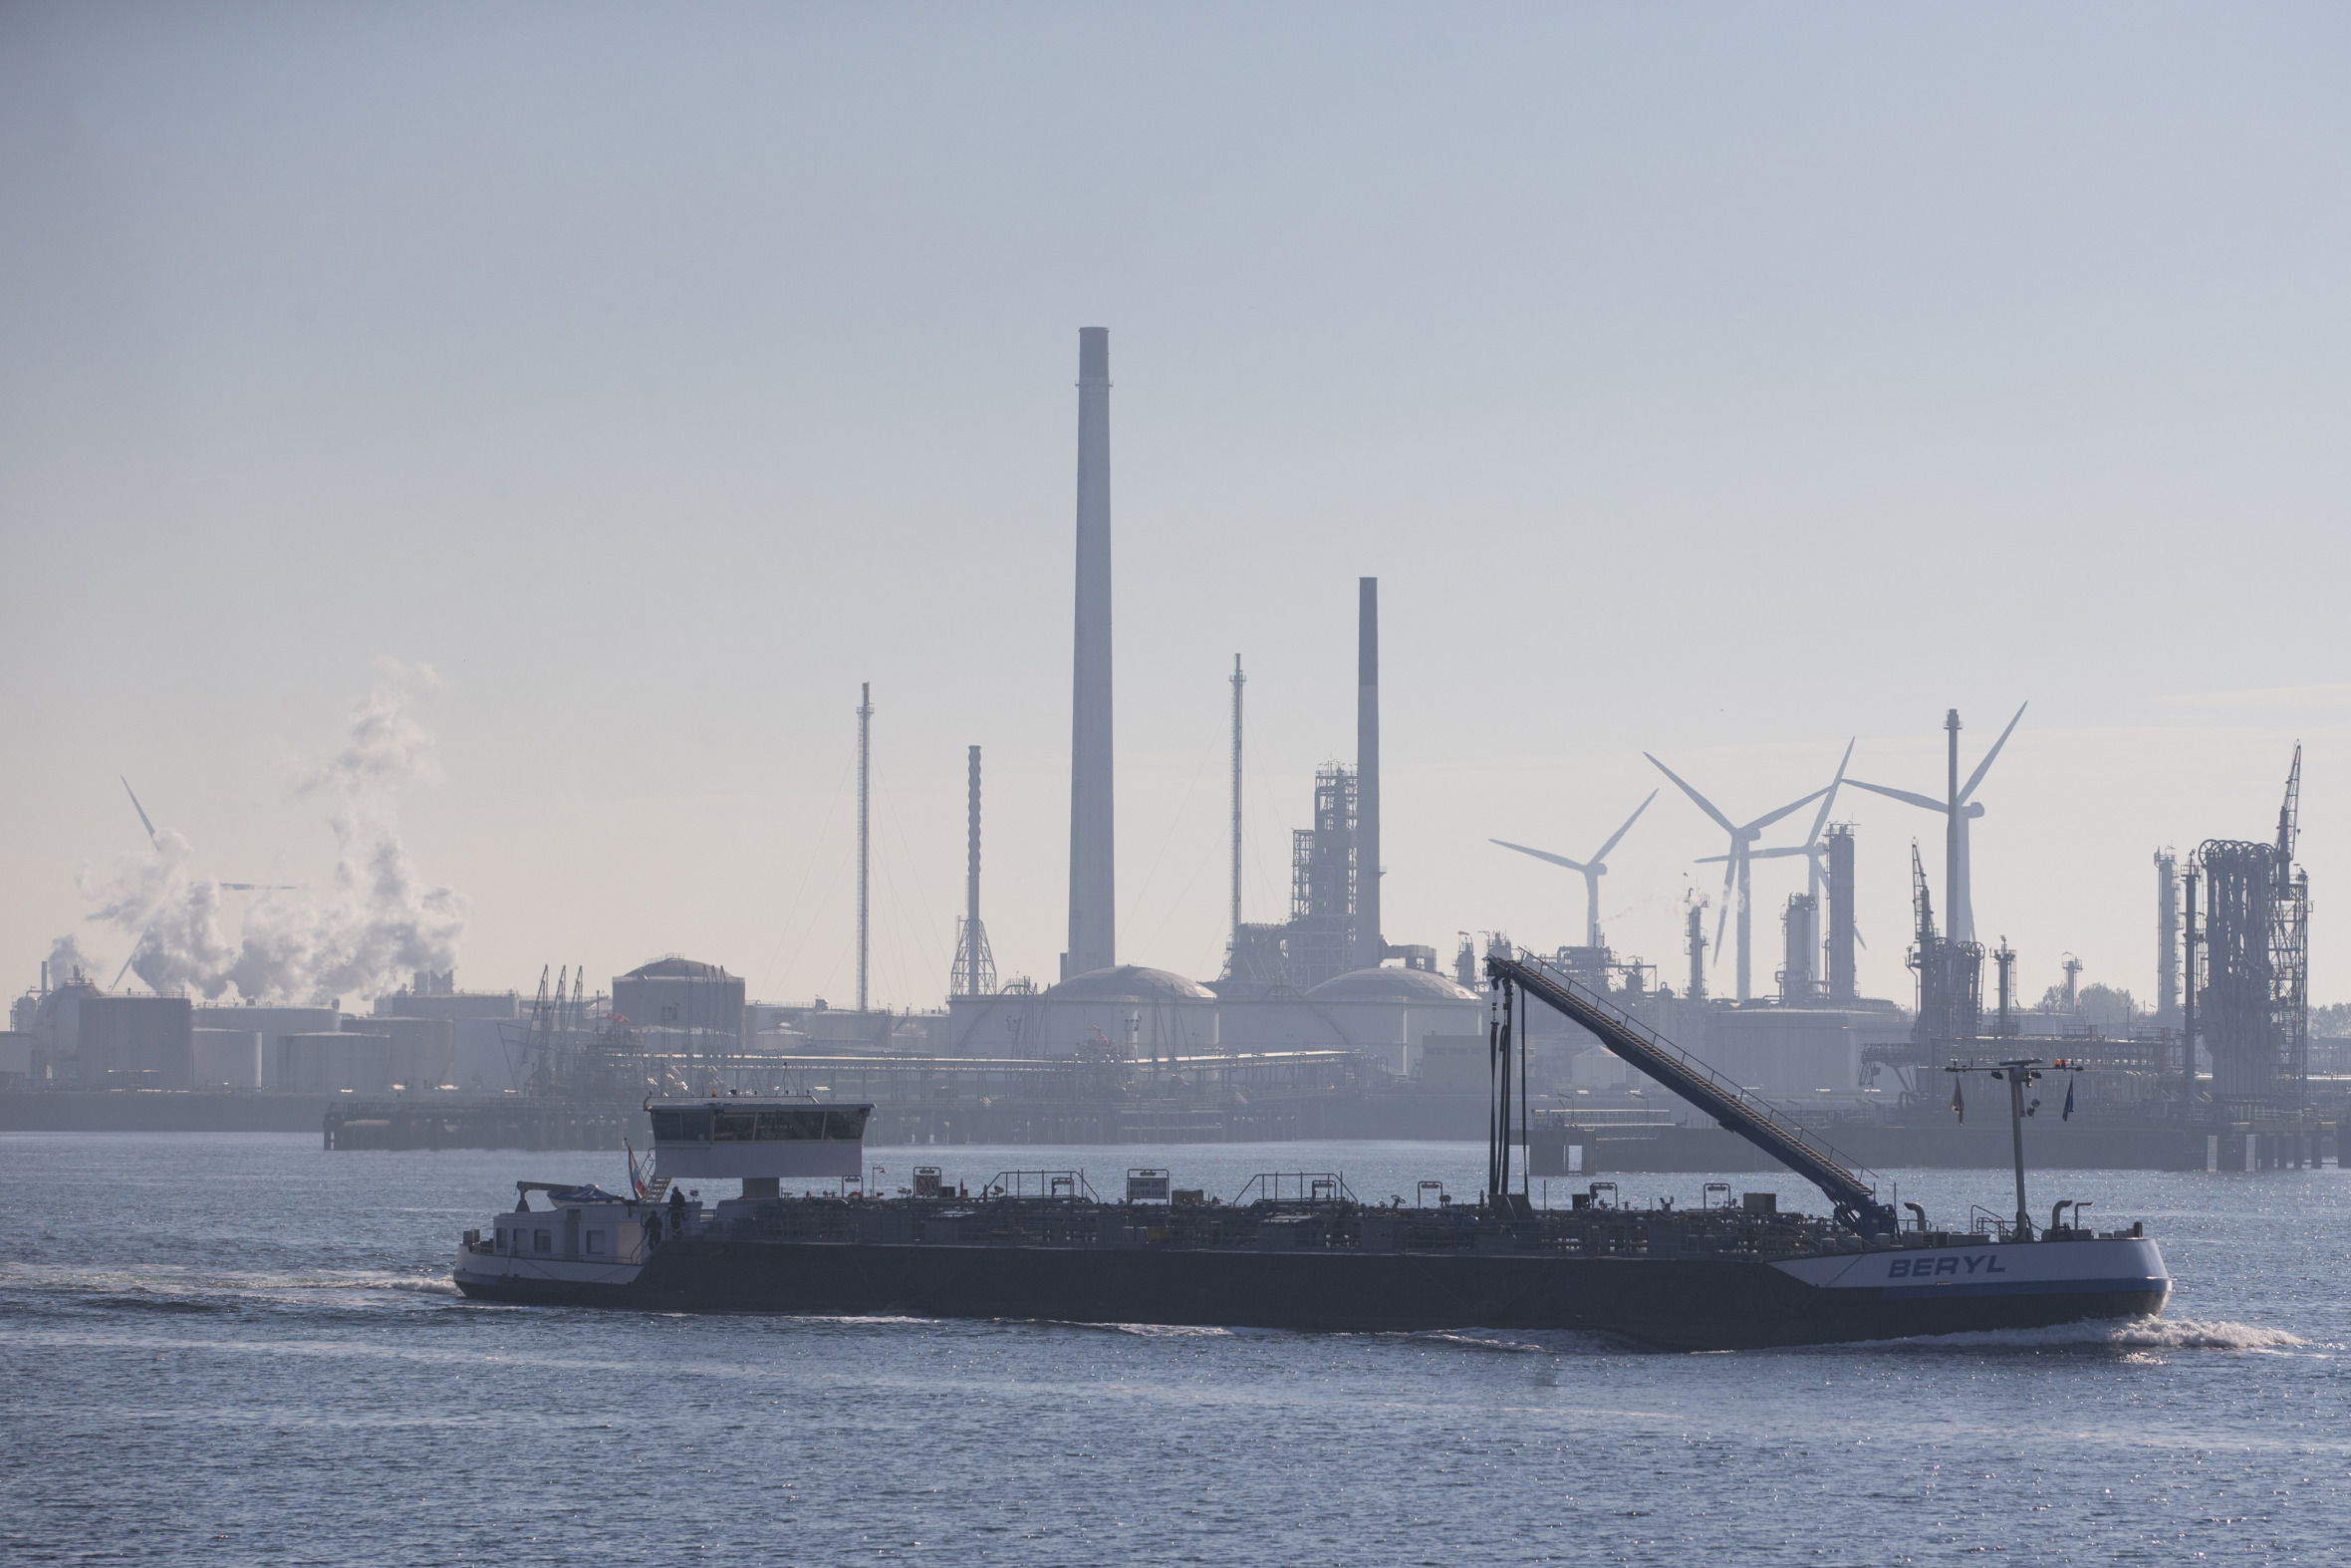 Port of Rotterdam, Netherlands. Photographer: Jasper Juinen/Bloomberg